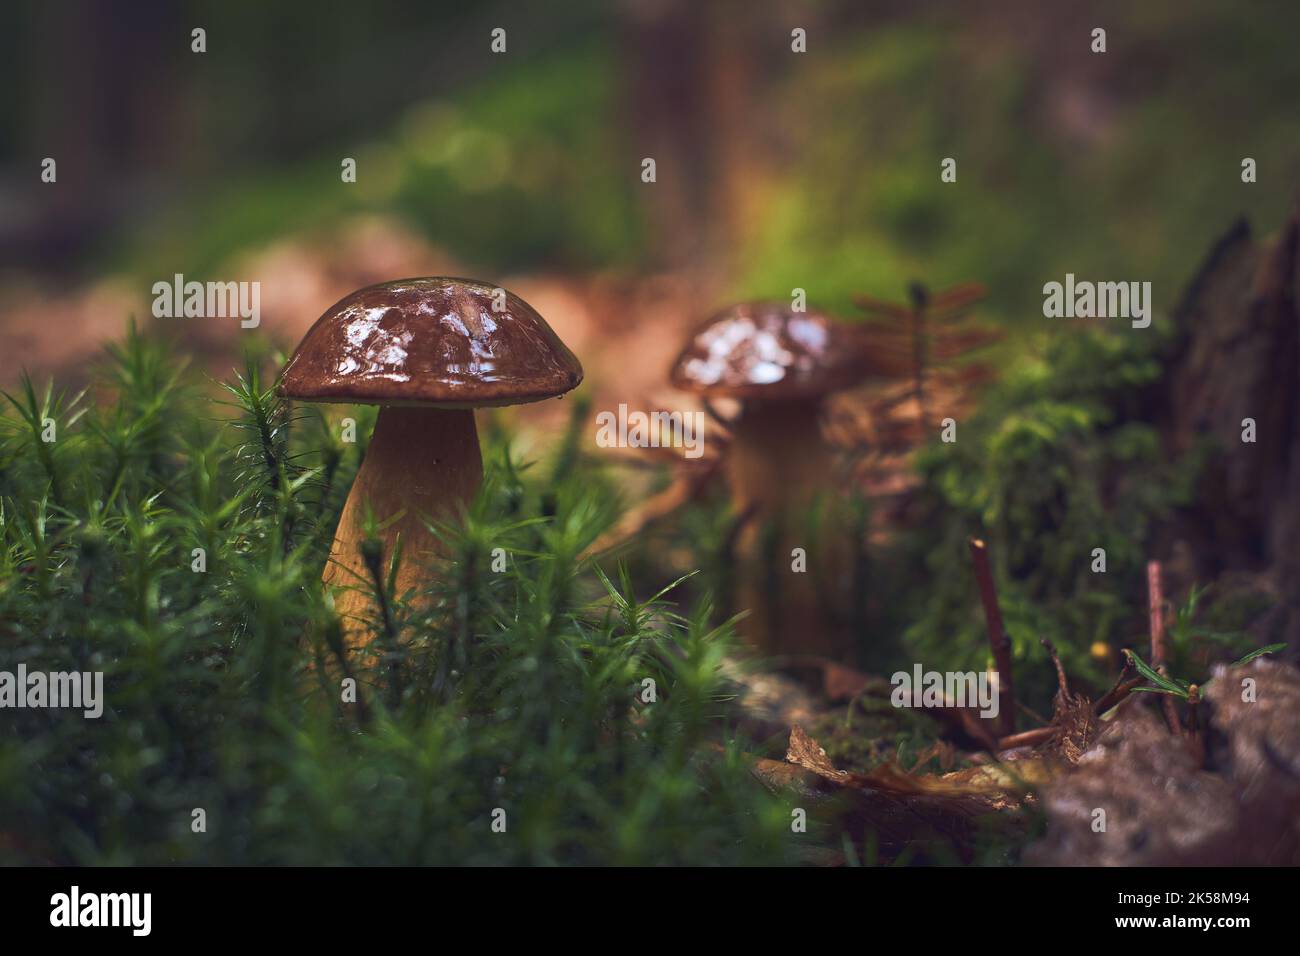 Chestnut Mushroom on mossy forest ground. High quality photo Stock Photo